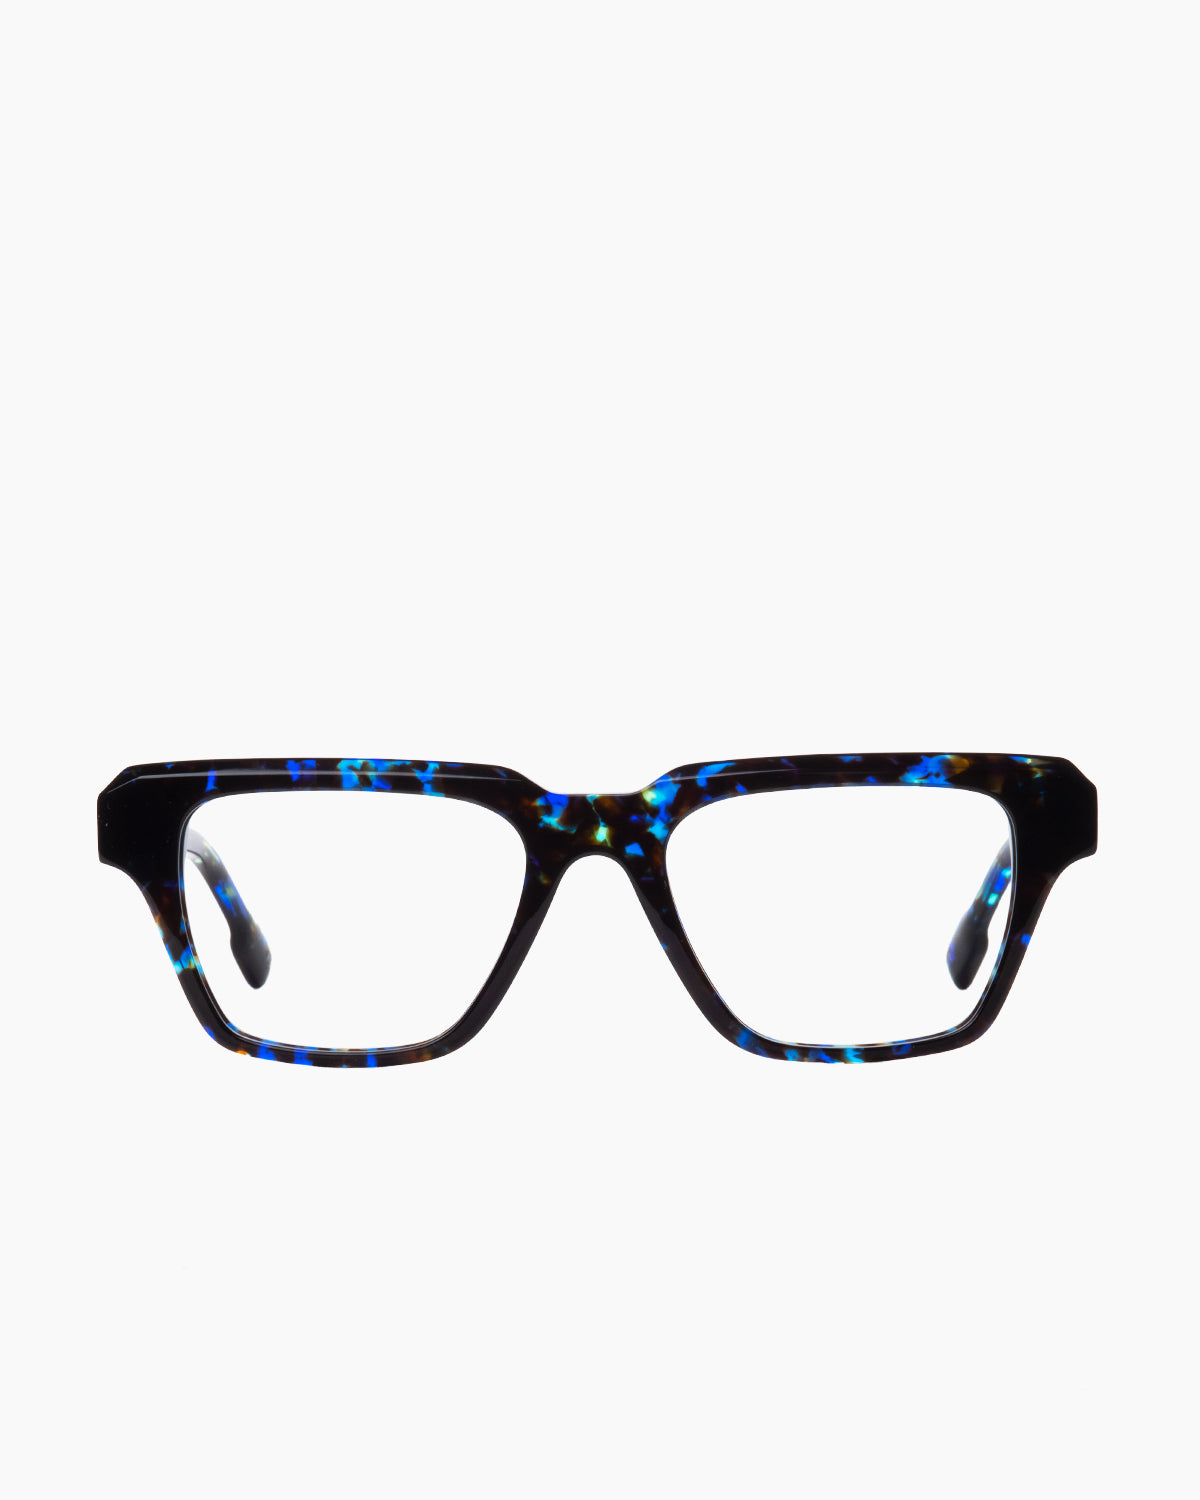 Spectacleeyeworks - Brad - c716 | Bar à lunettes